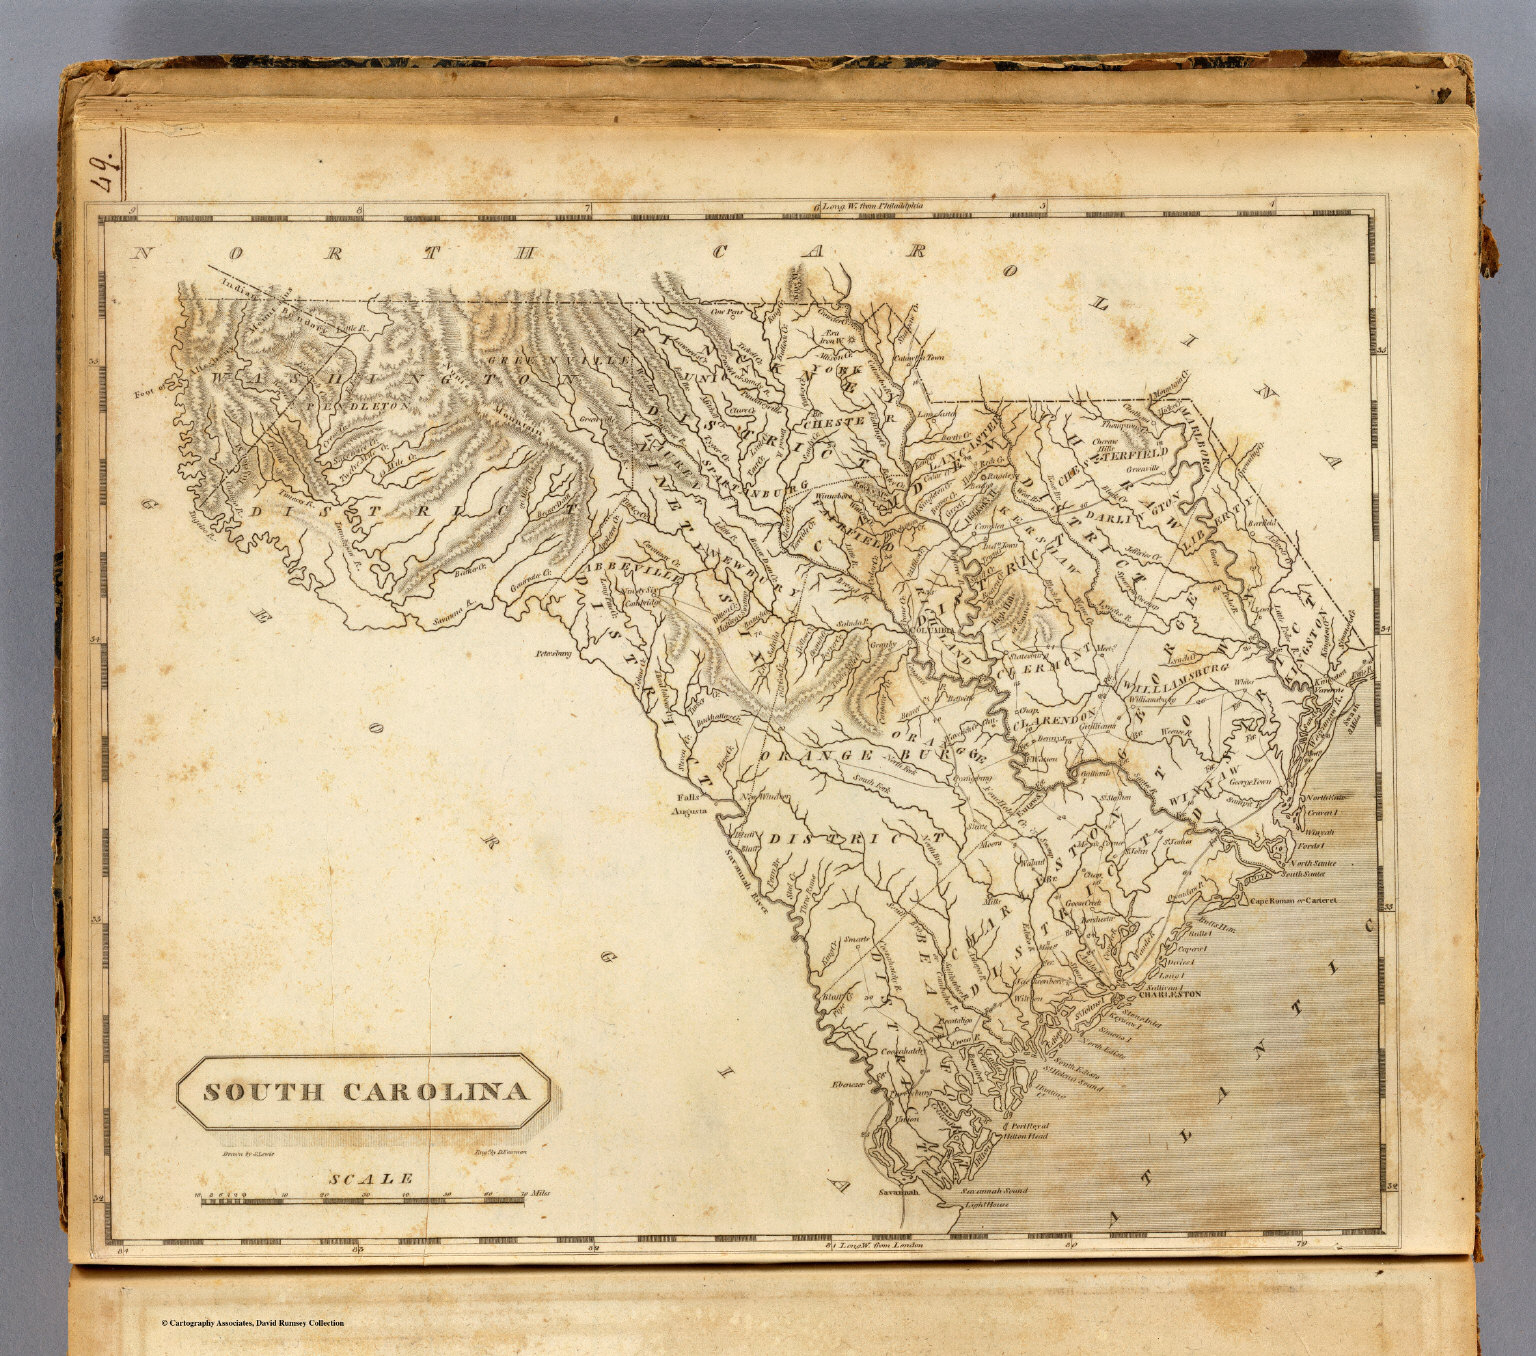 South Carolina David Rumsey Historical Map Collection 9052